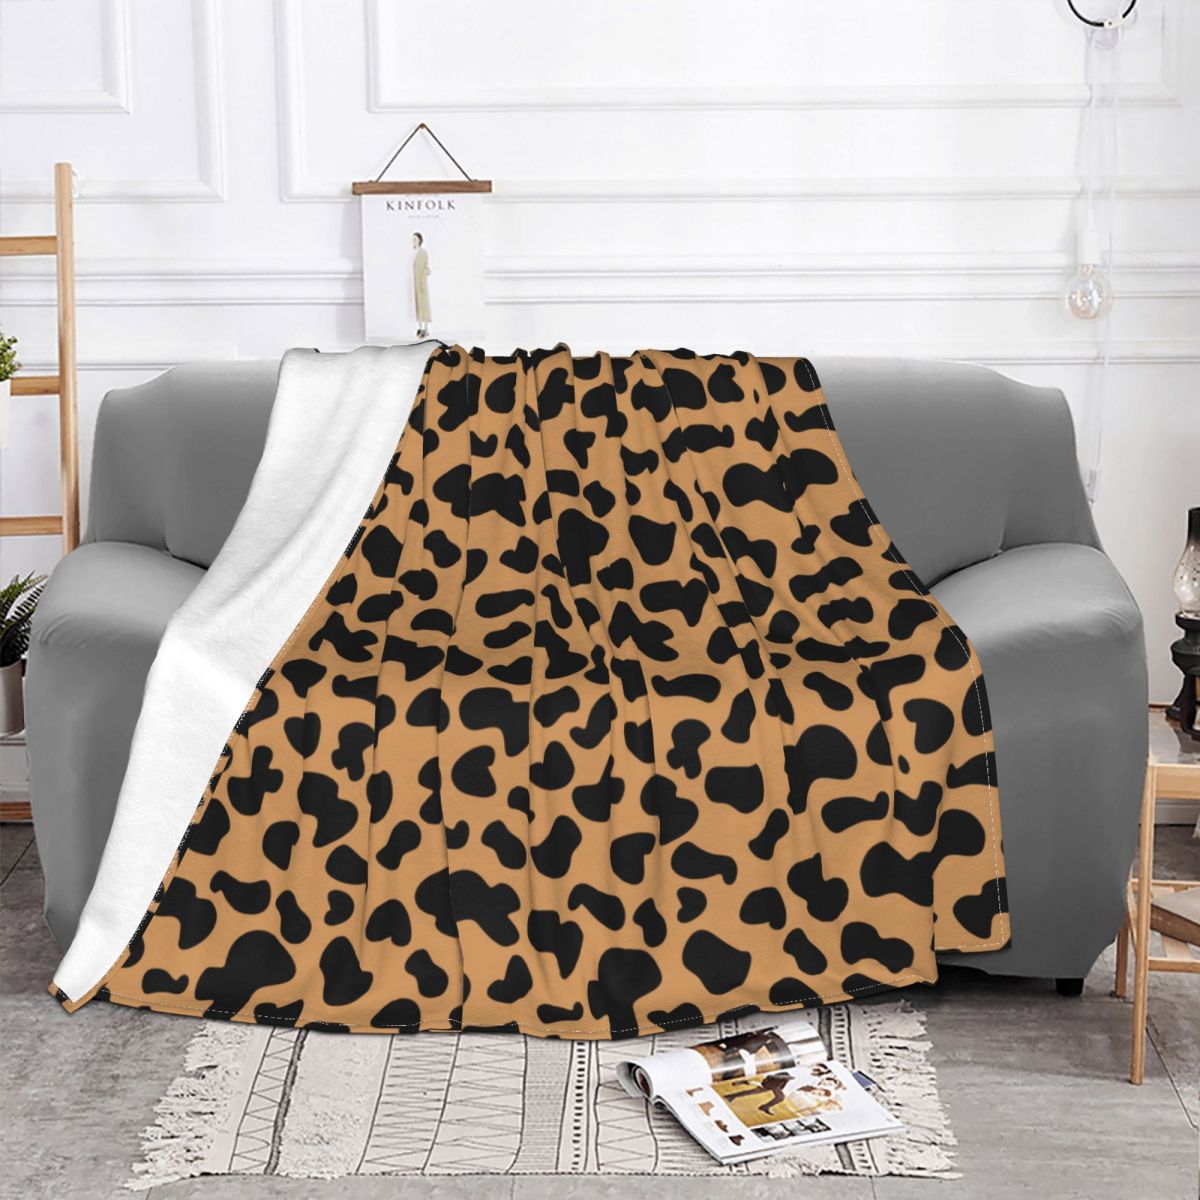 Animal Skin Texture Ultra-Soft Leopard Print Blankets